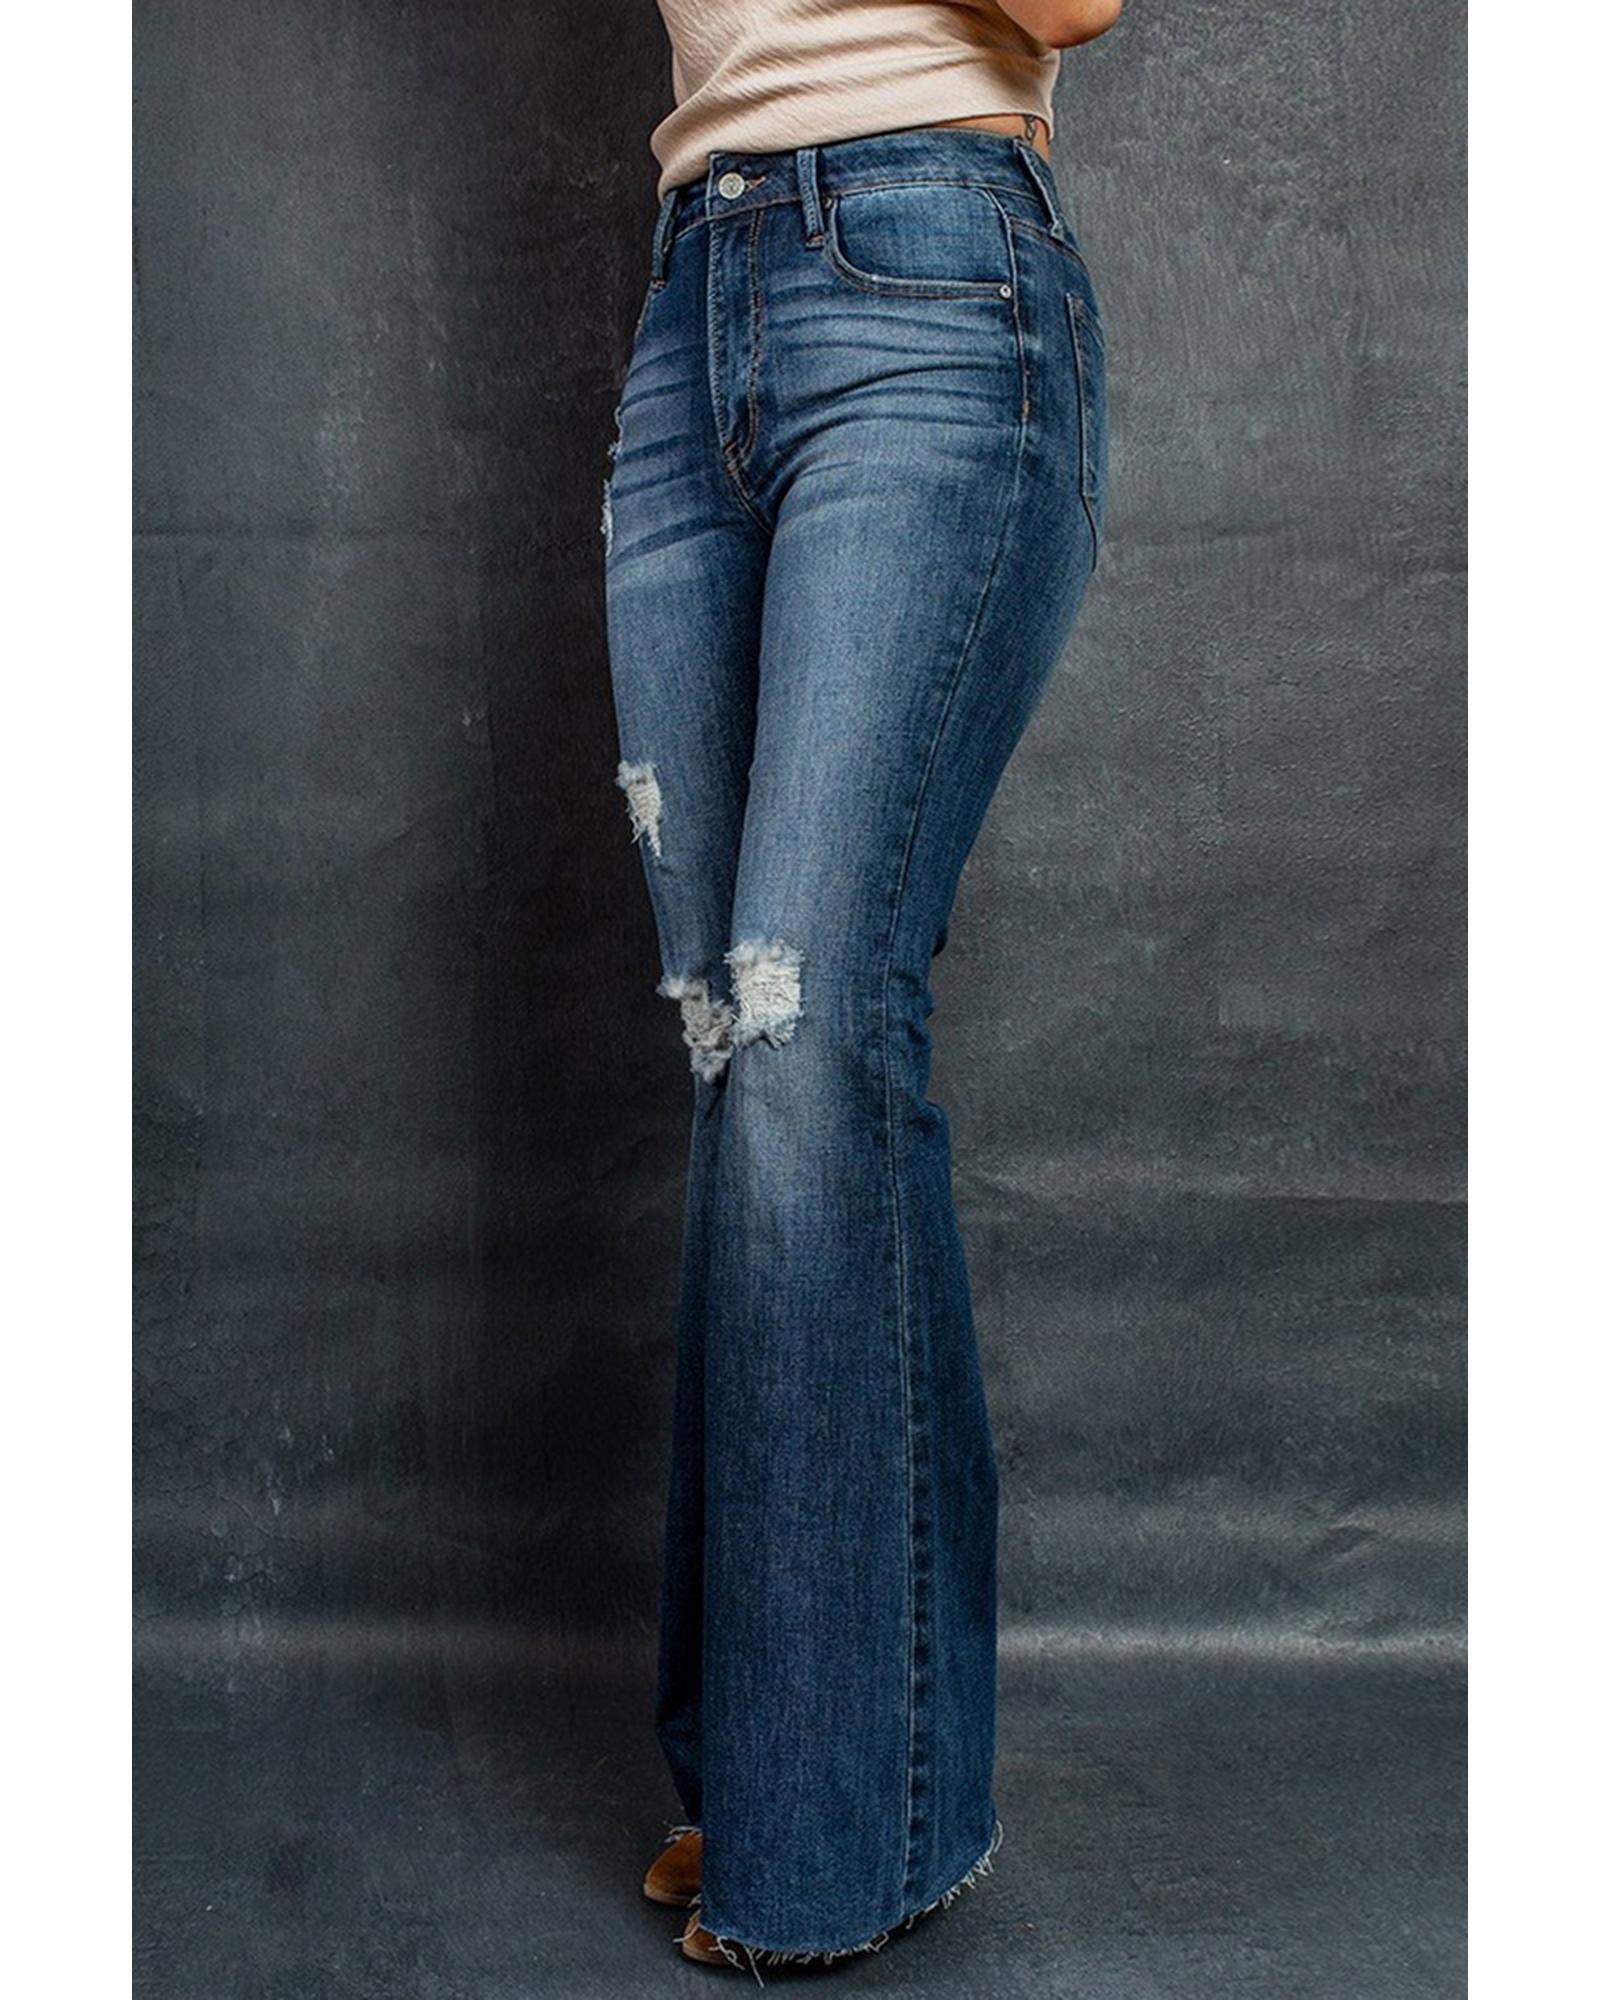 Azura Exchange Mid Rise Flare Jeans - S